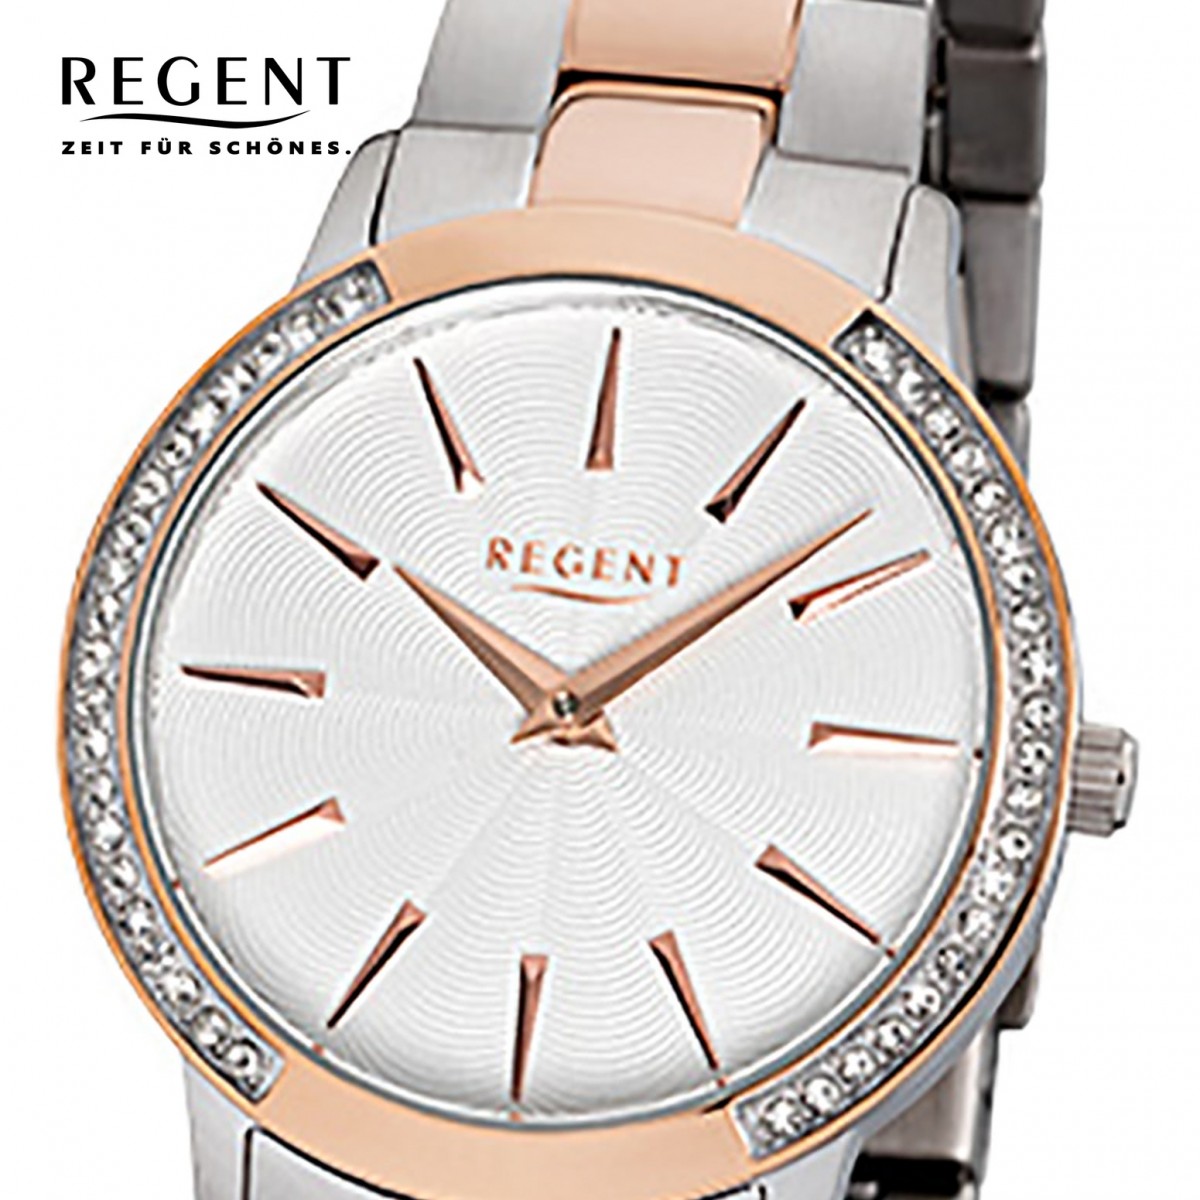 Regent Damen-Armbanduhr 32-F-1056 rosegold URF1056 Edelstahl-Armband silber UR Quarz-Uhr